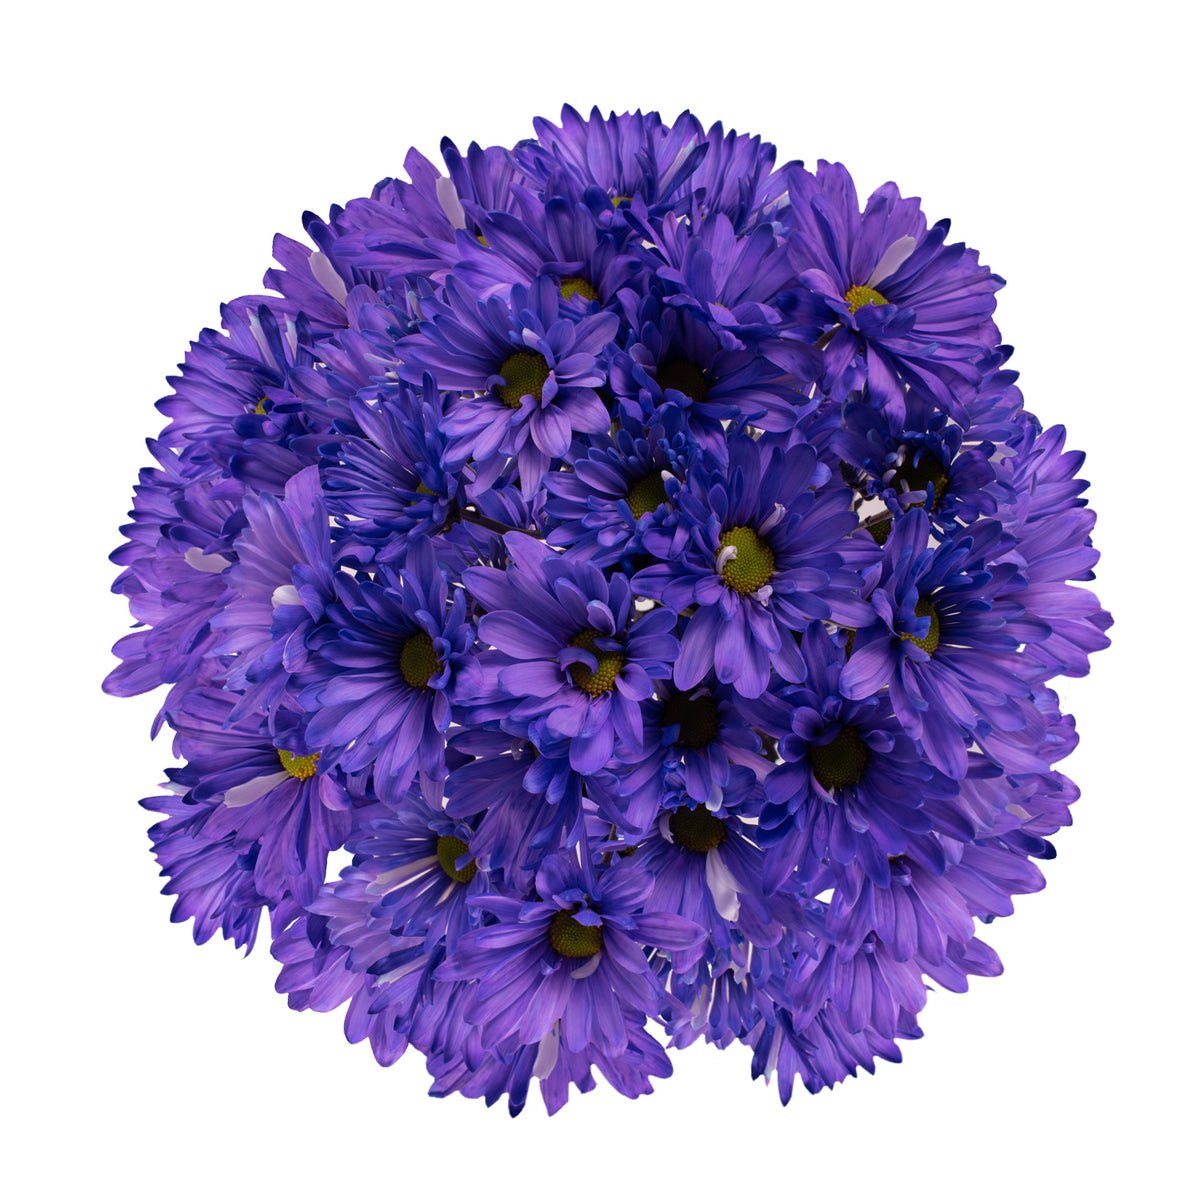 purple daisy png